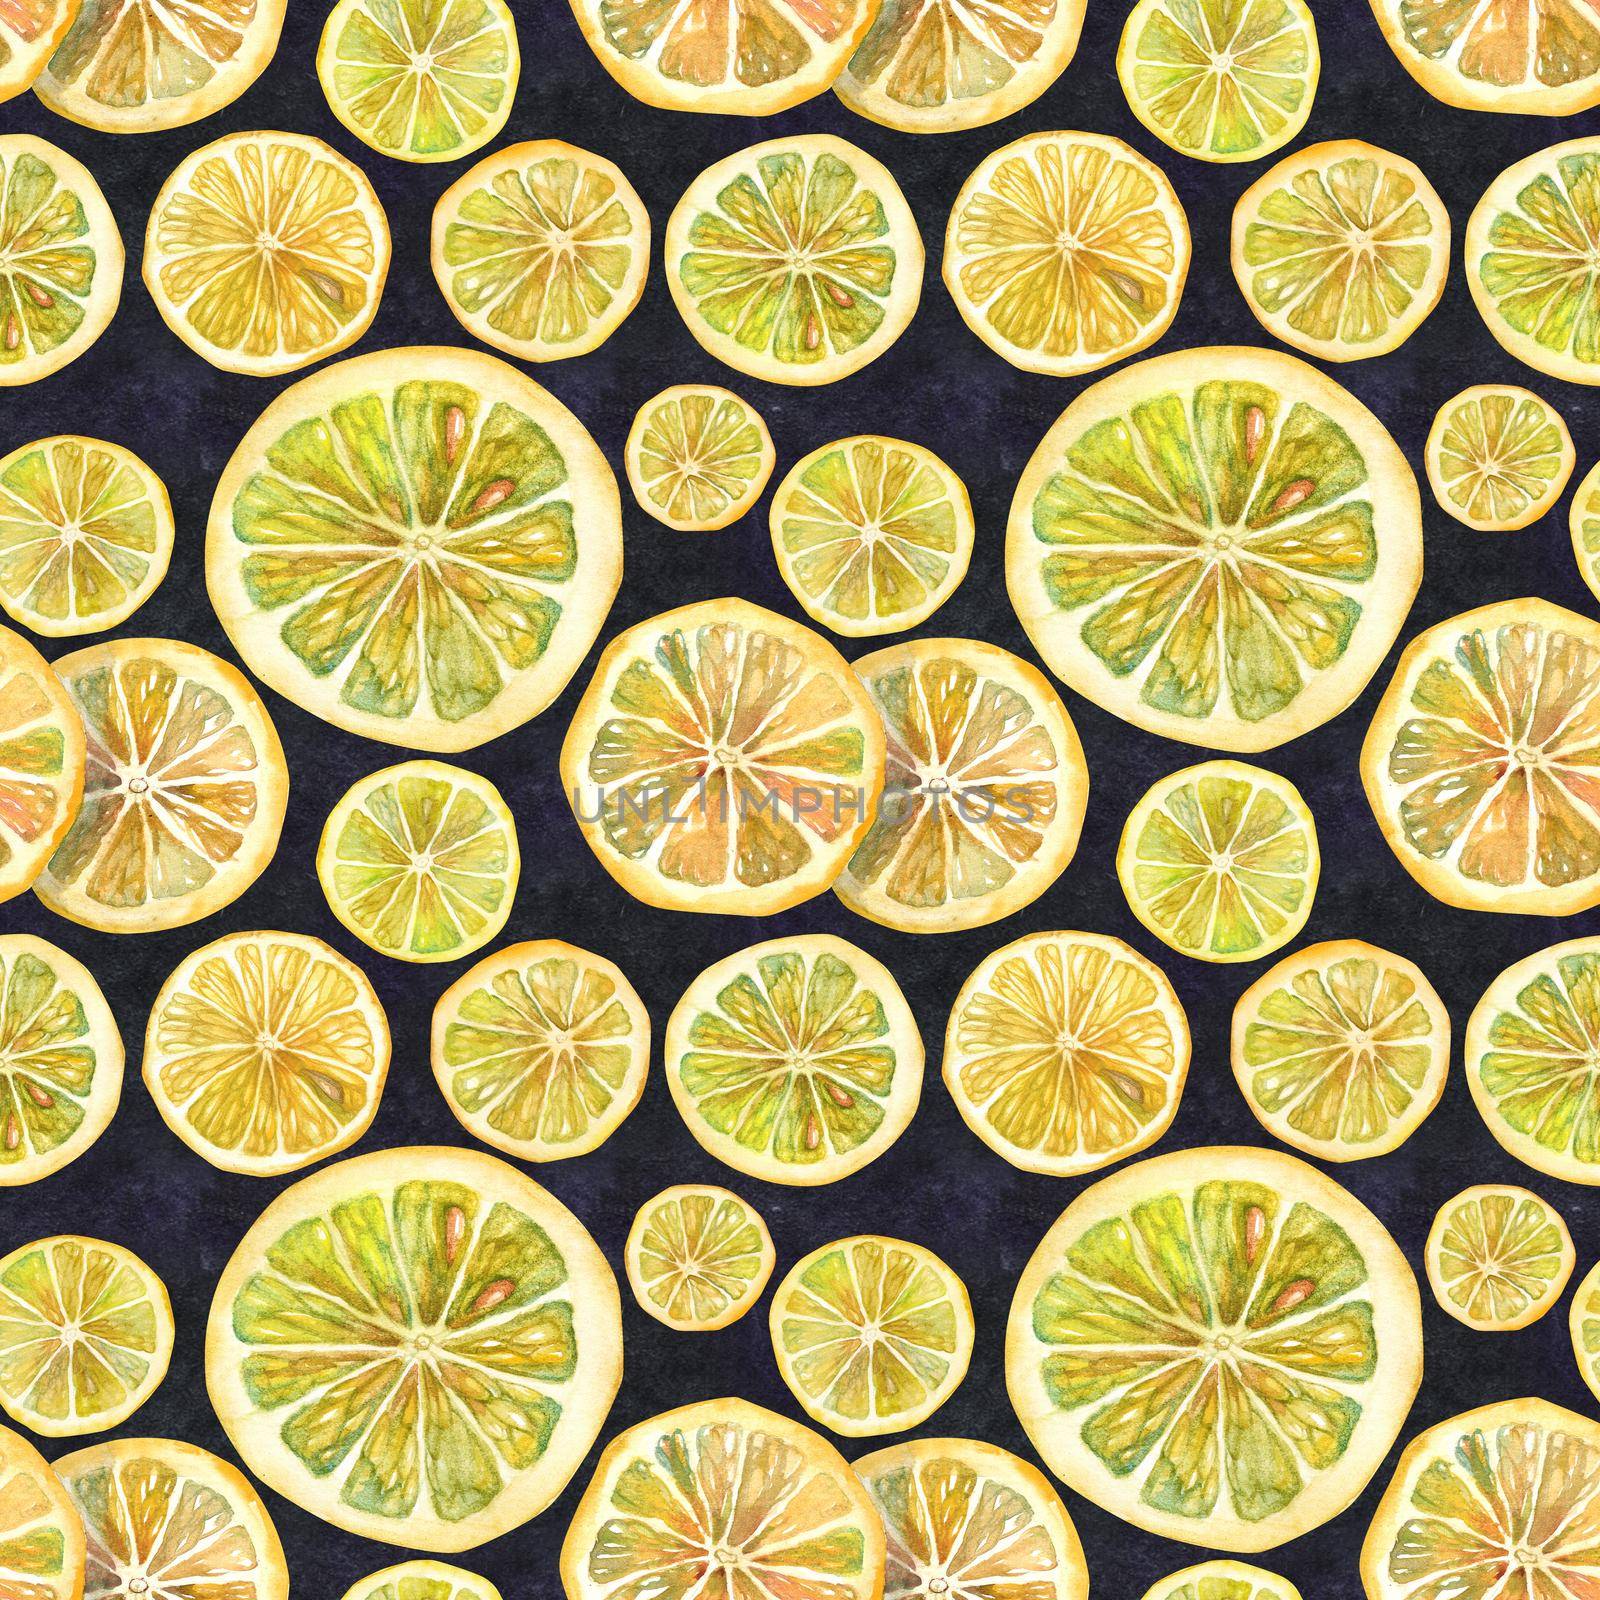 Food watercolor seamless pattern. Lemon slices